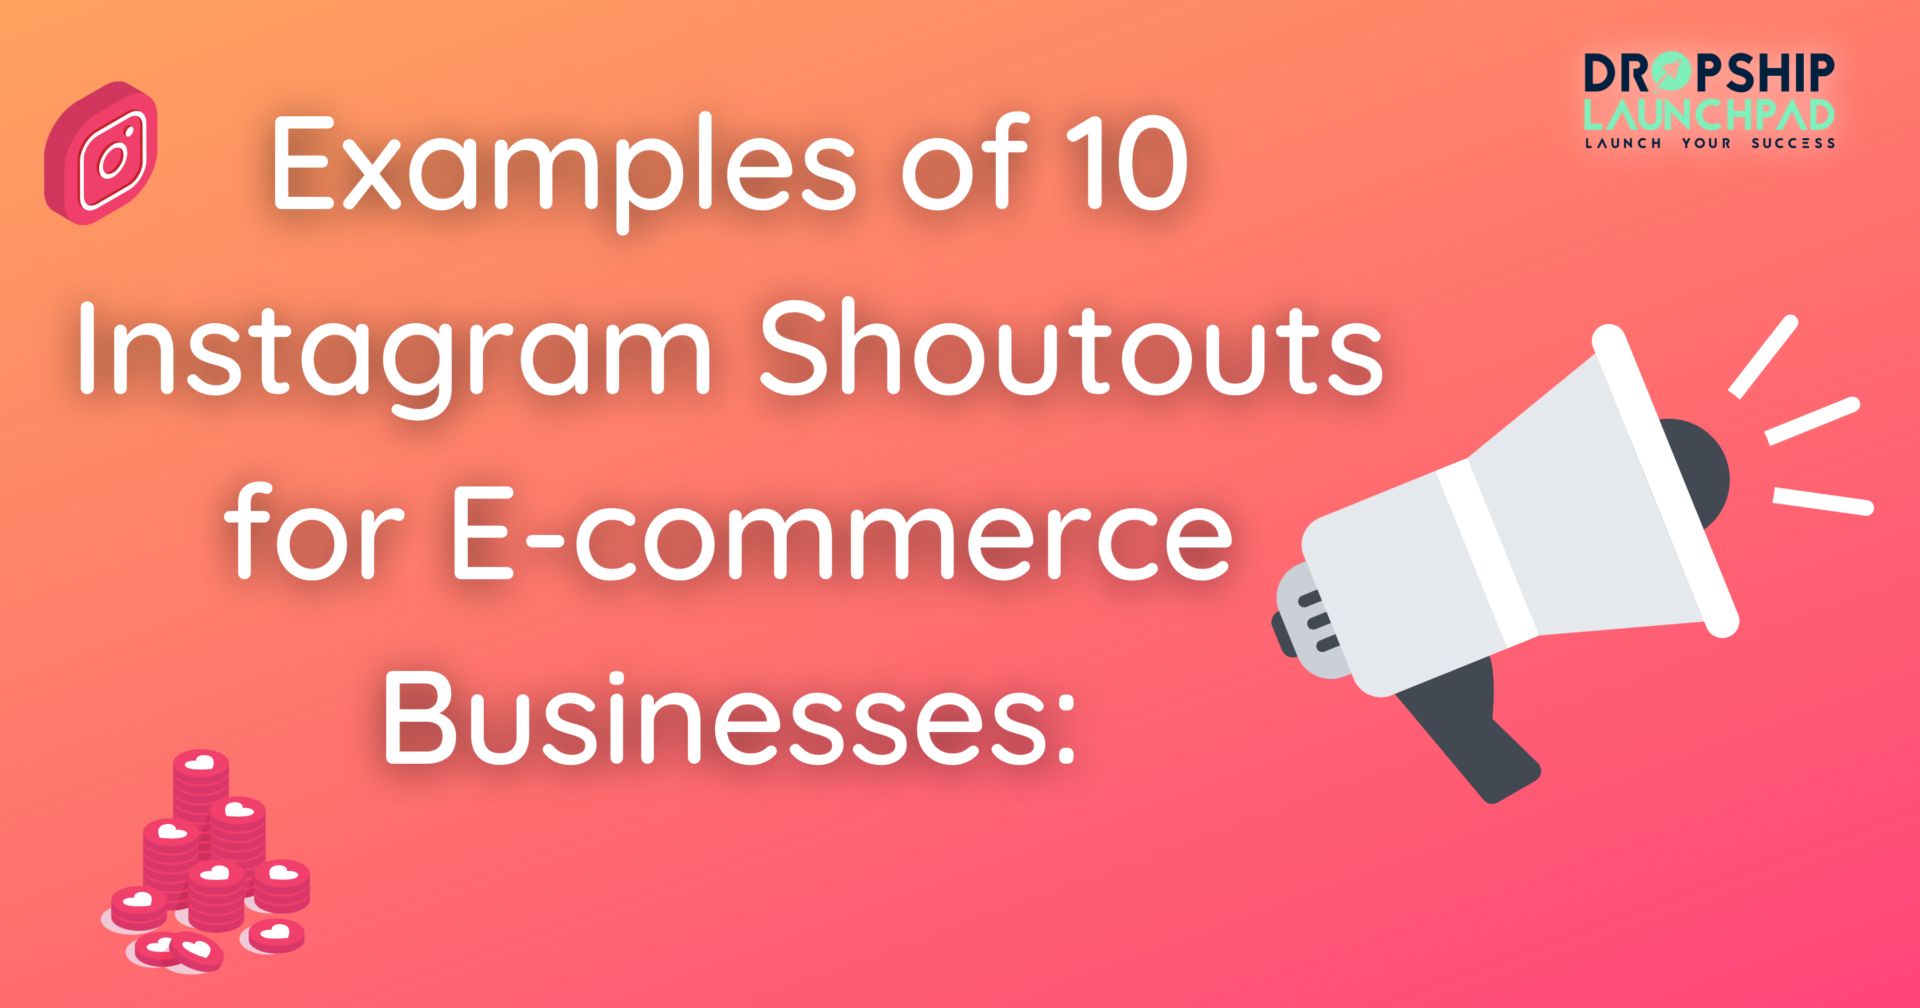 Instagram shoutouts for e-commerce businesses